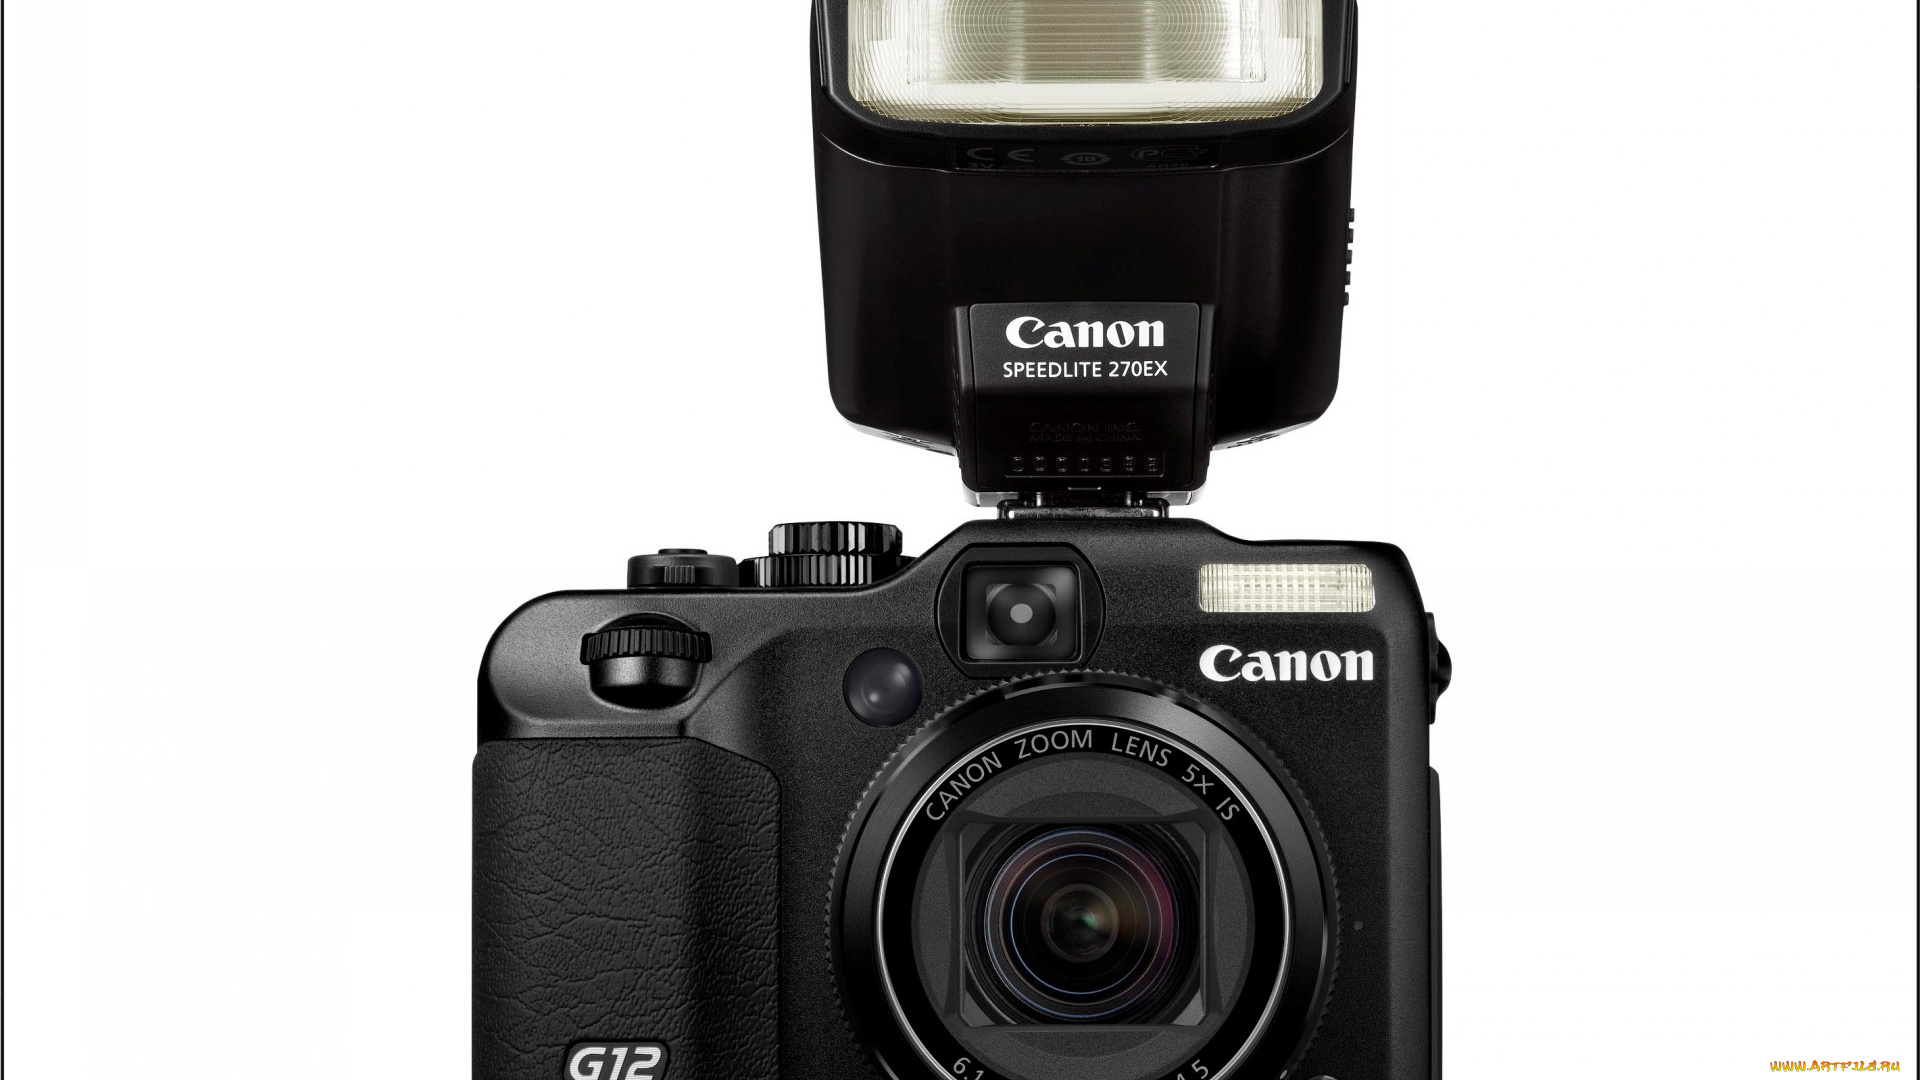 canon, power, shot, g12, &, w270ex, бренды, cancun, фотокамера, цифровая, объектив, вспышка